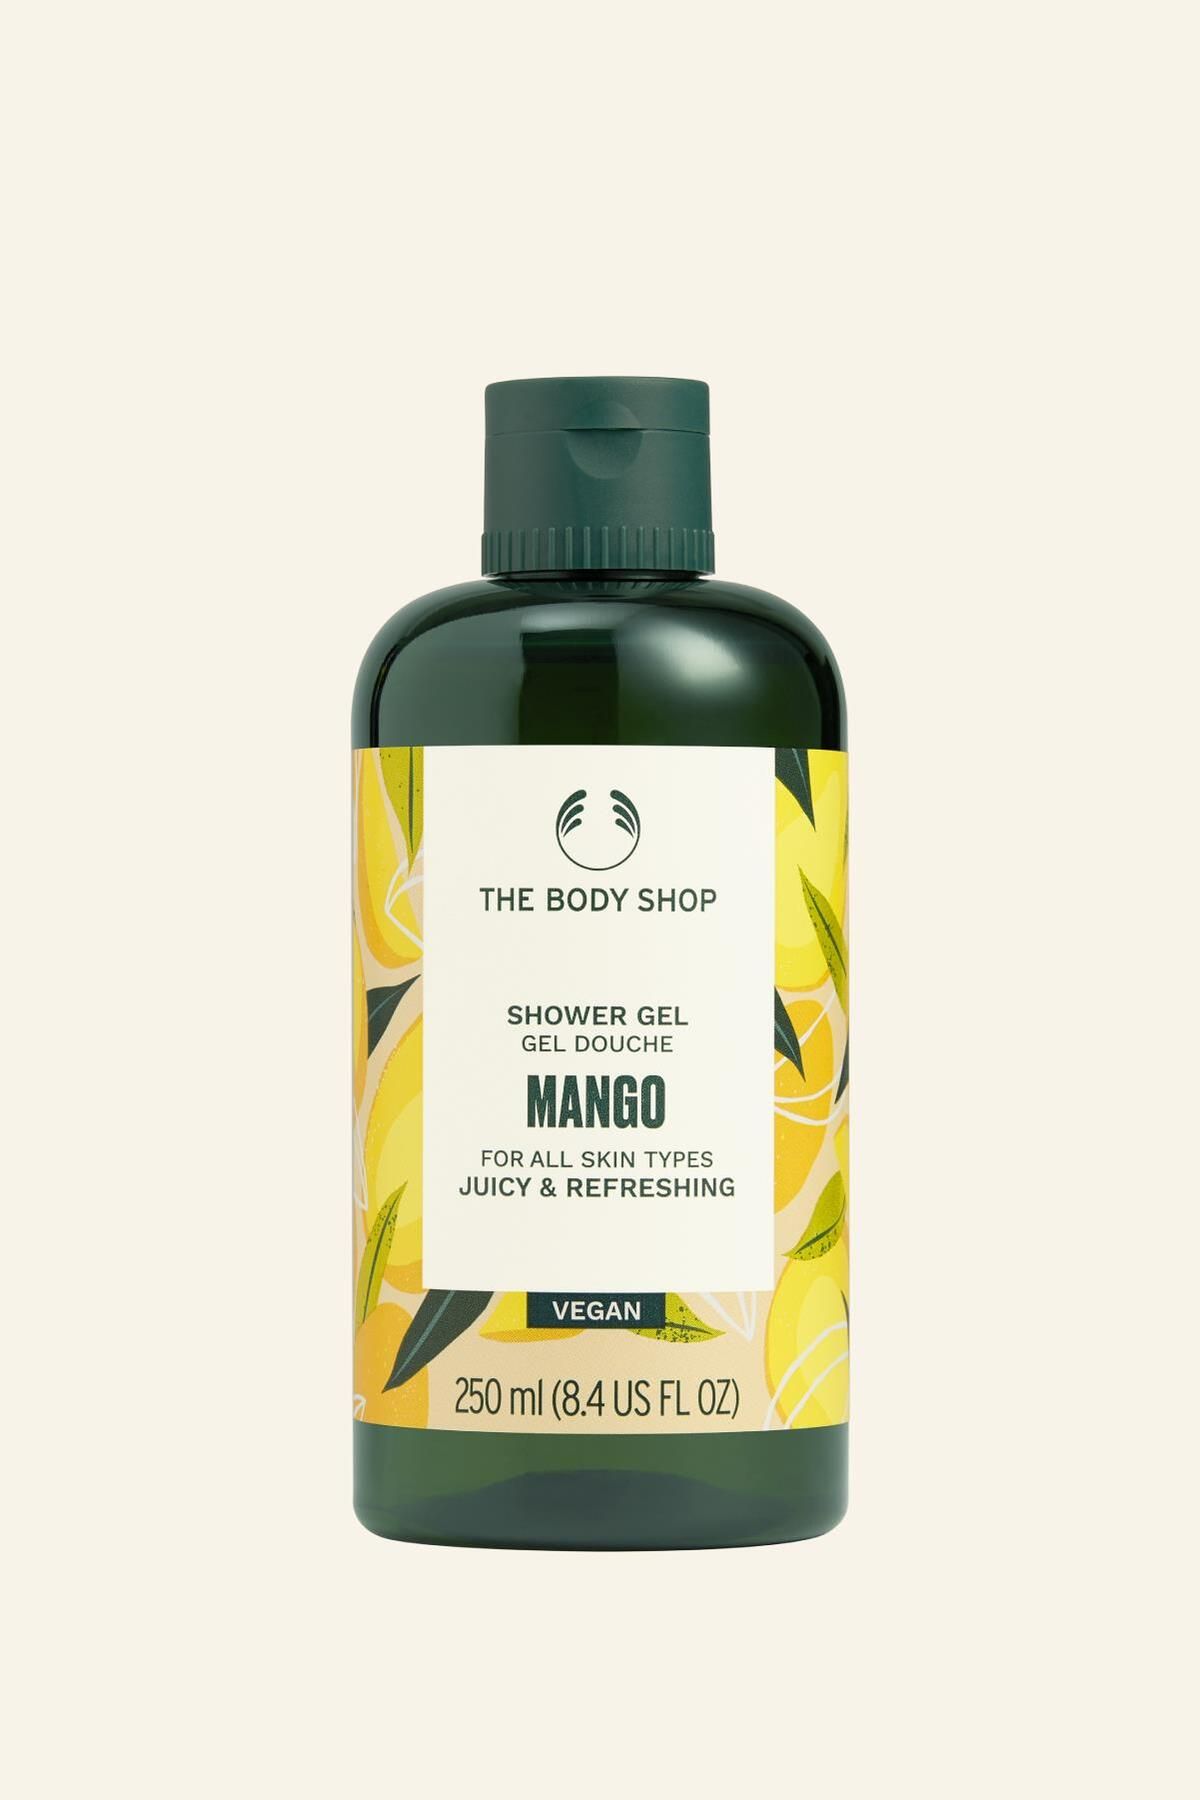 THE BODY SHOP ژل حمام مانگو با بوی تازه و تمیز